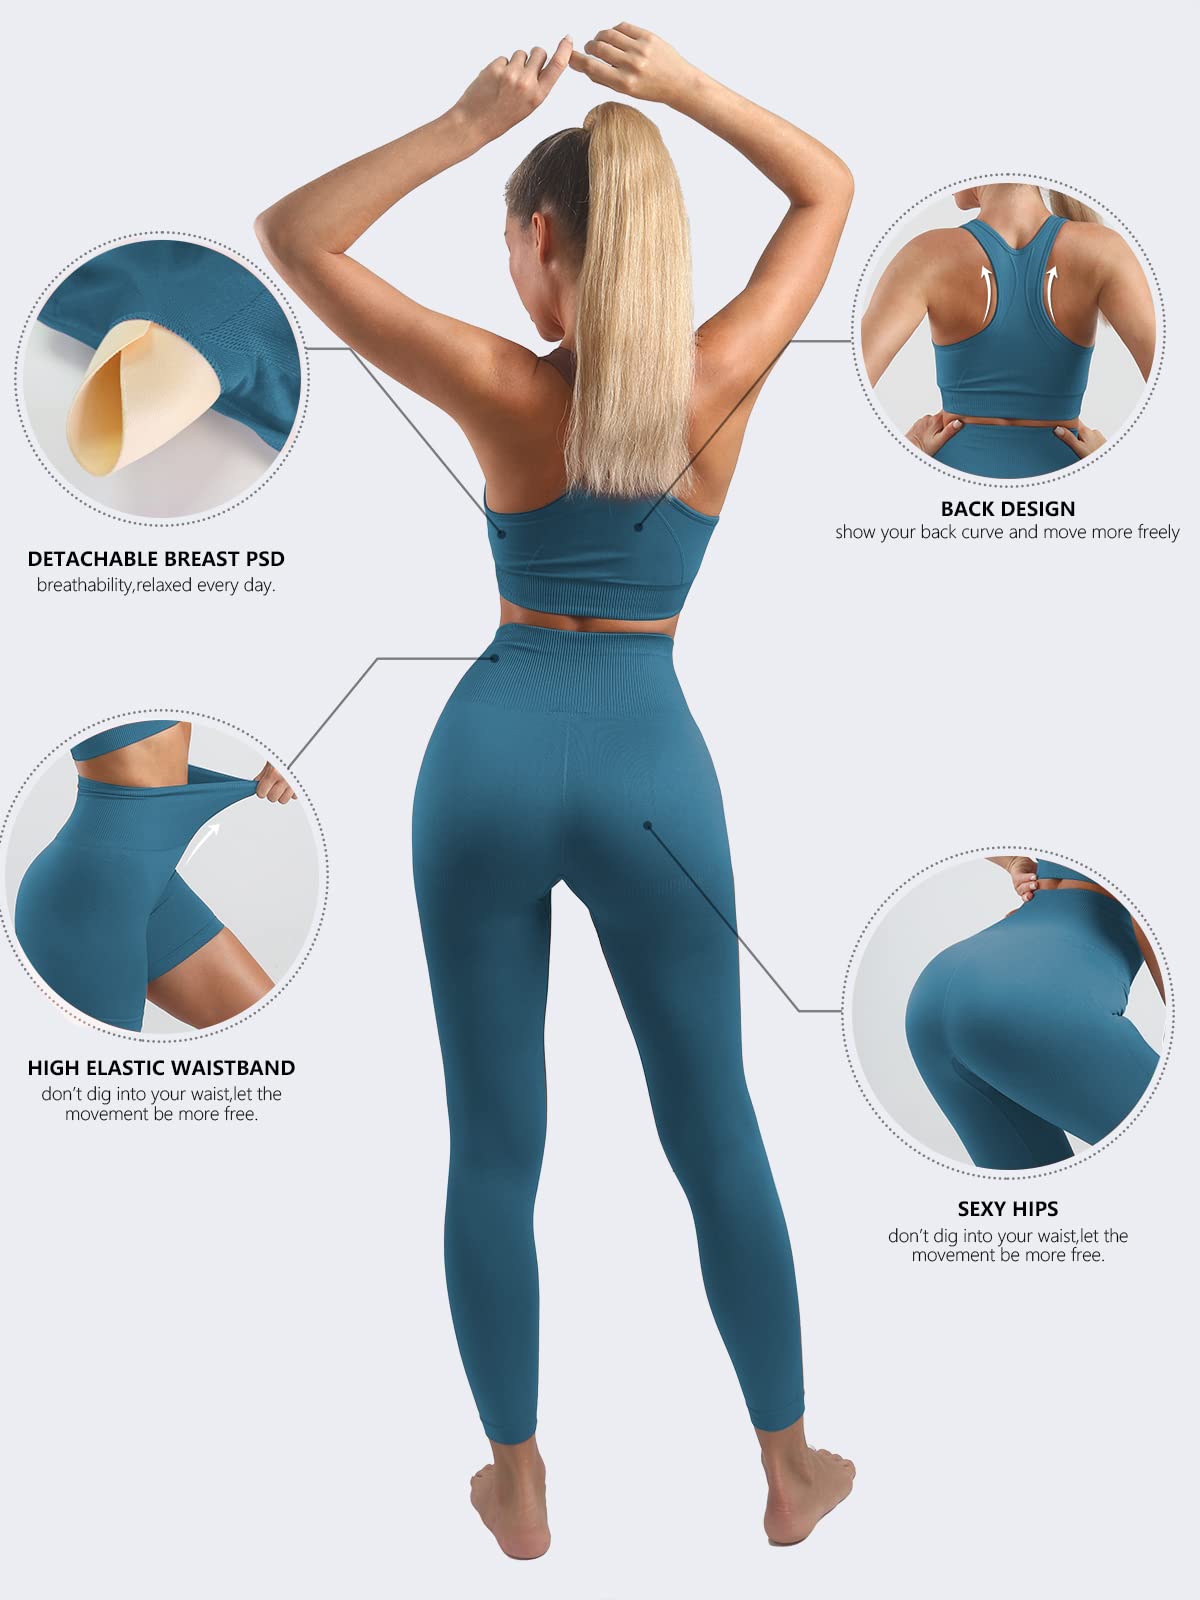 Lingdu Women’s Yoga Outfits 2 piece Set Workout Tracksuits Sports Bra High Waist Legging Active Wear Athletic Clothing Set